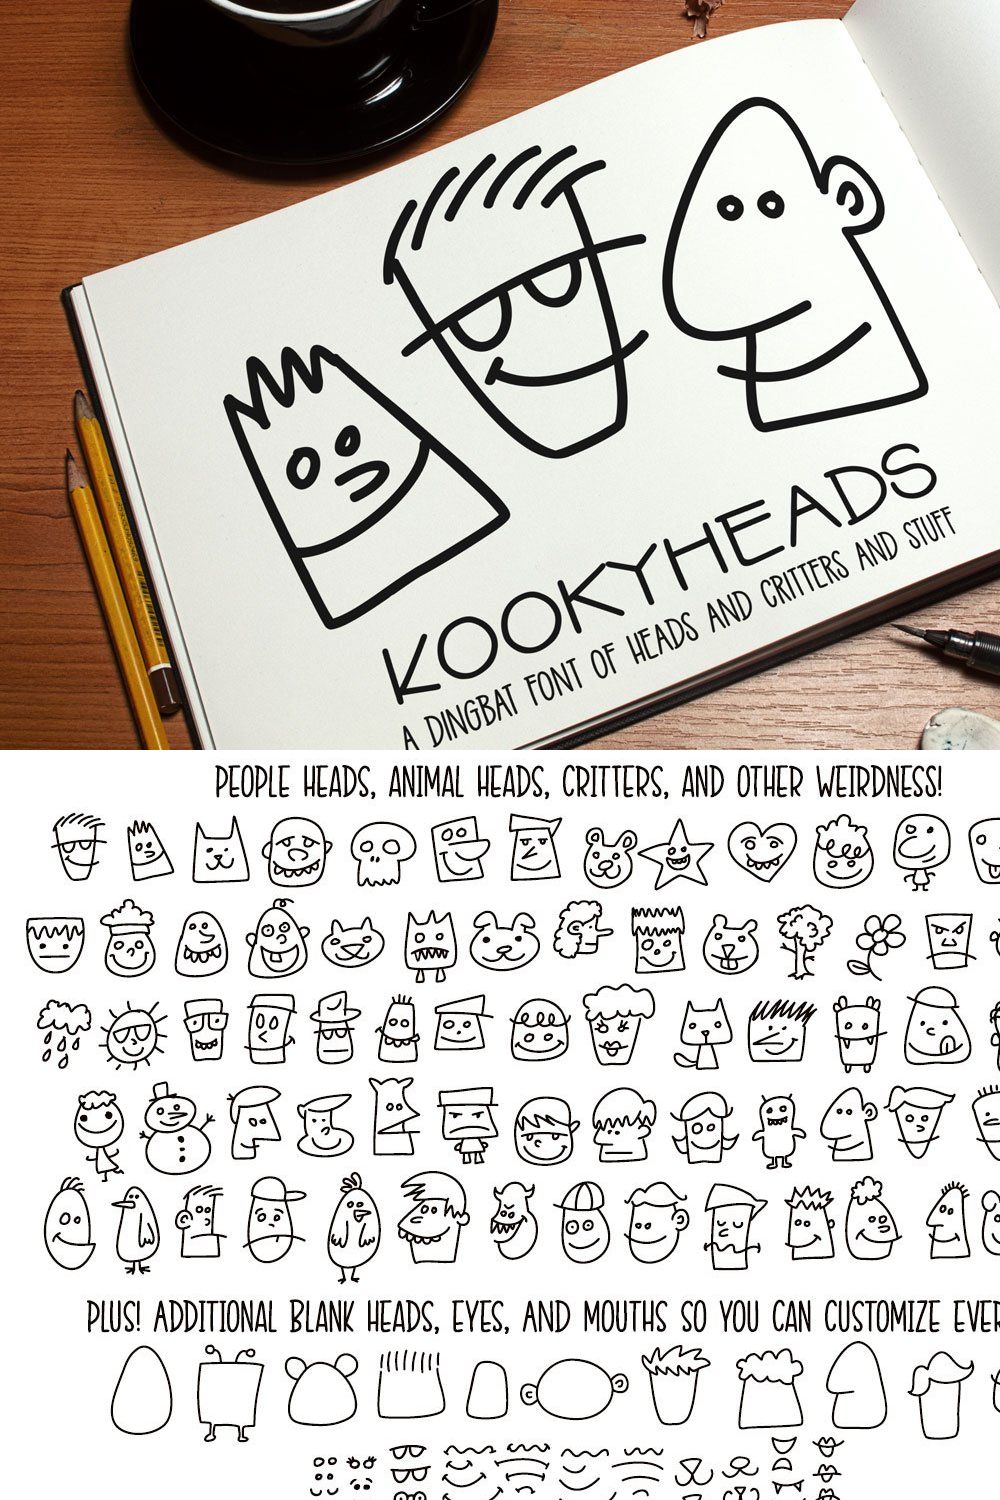 Kookyheads - a dingbat doodle font! pinterest preview image.